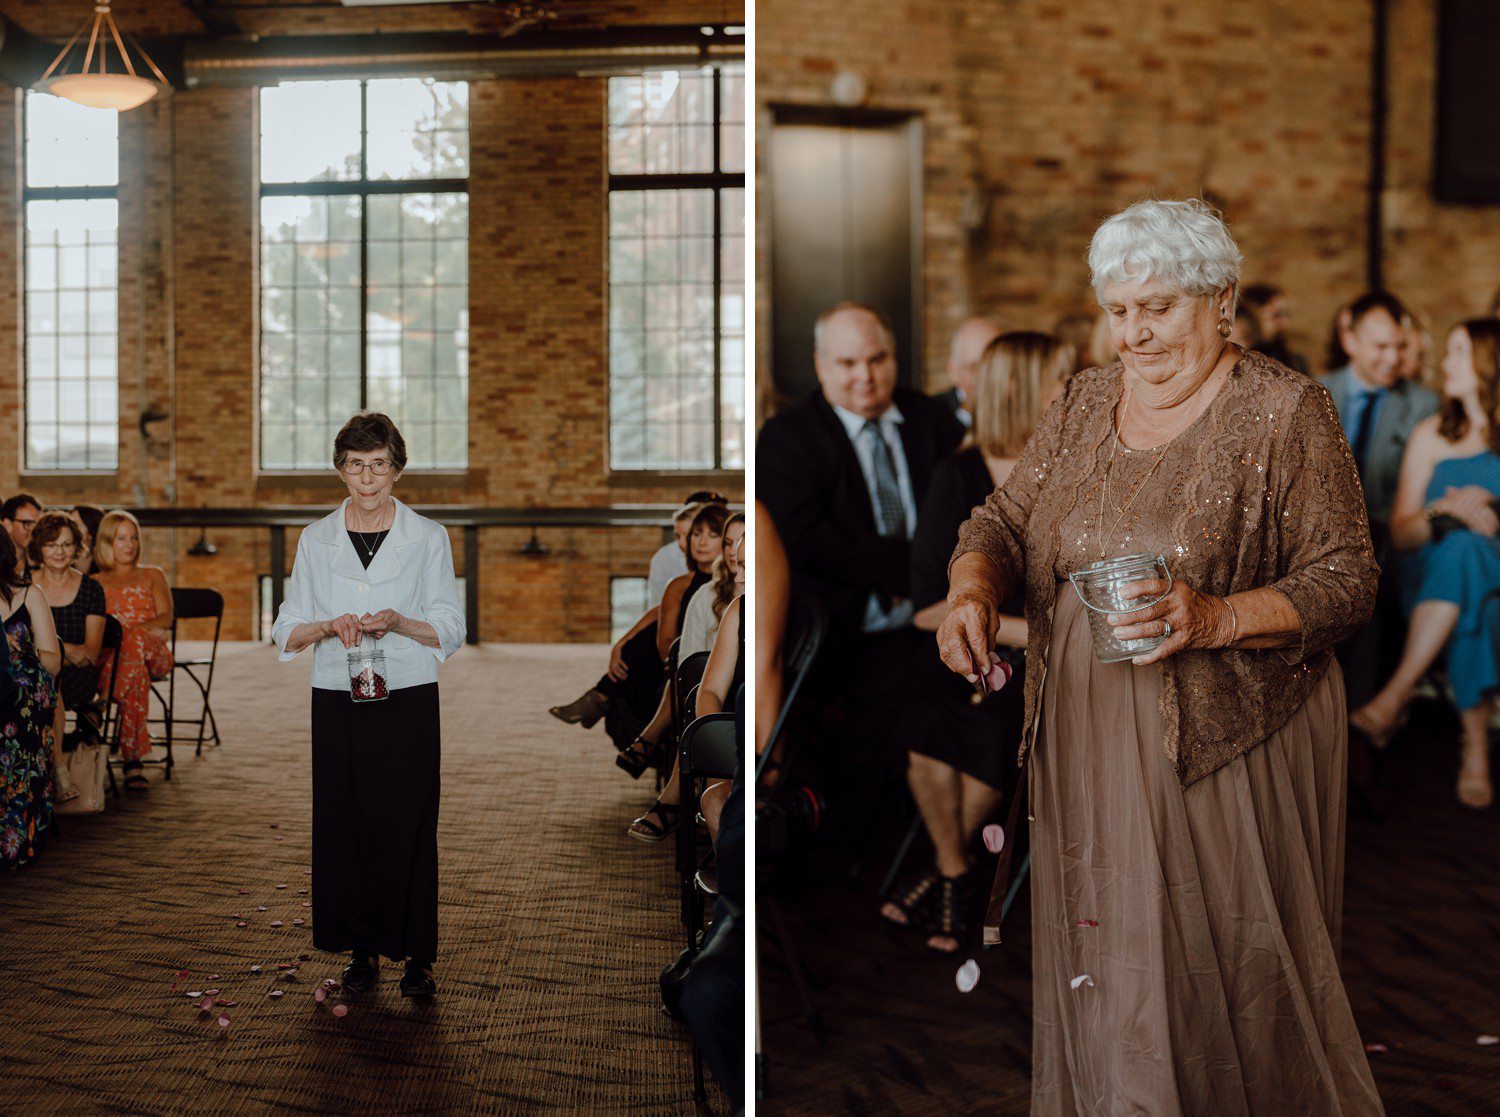 Grandmas as Flower Girls at Wedding